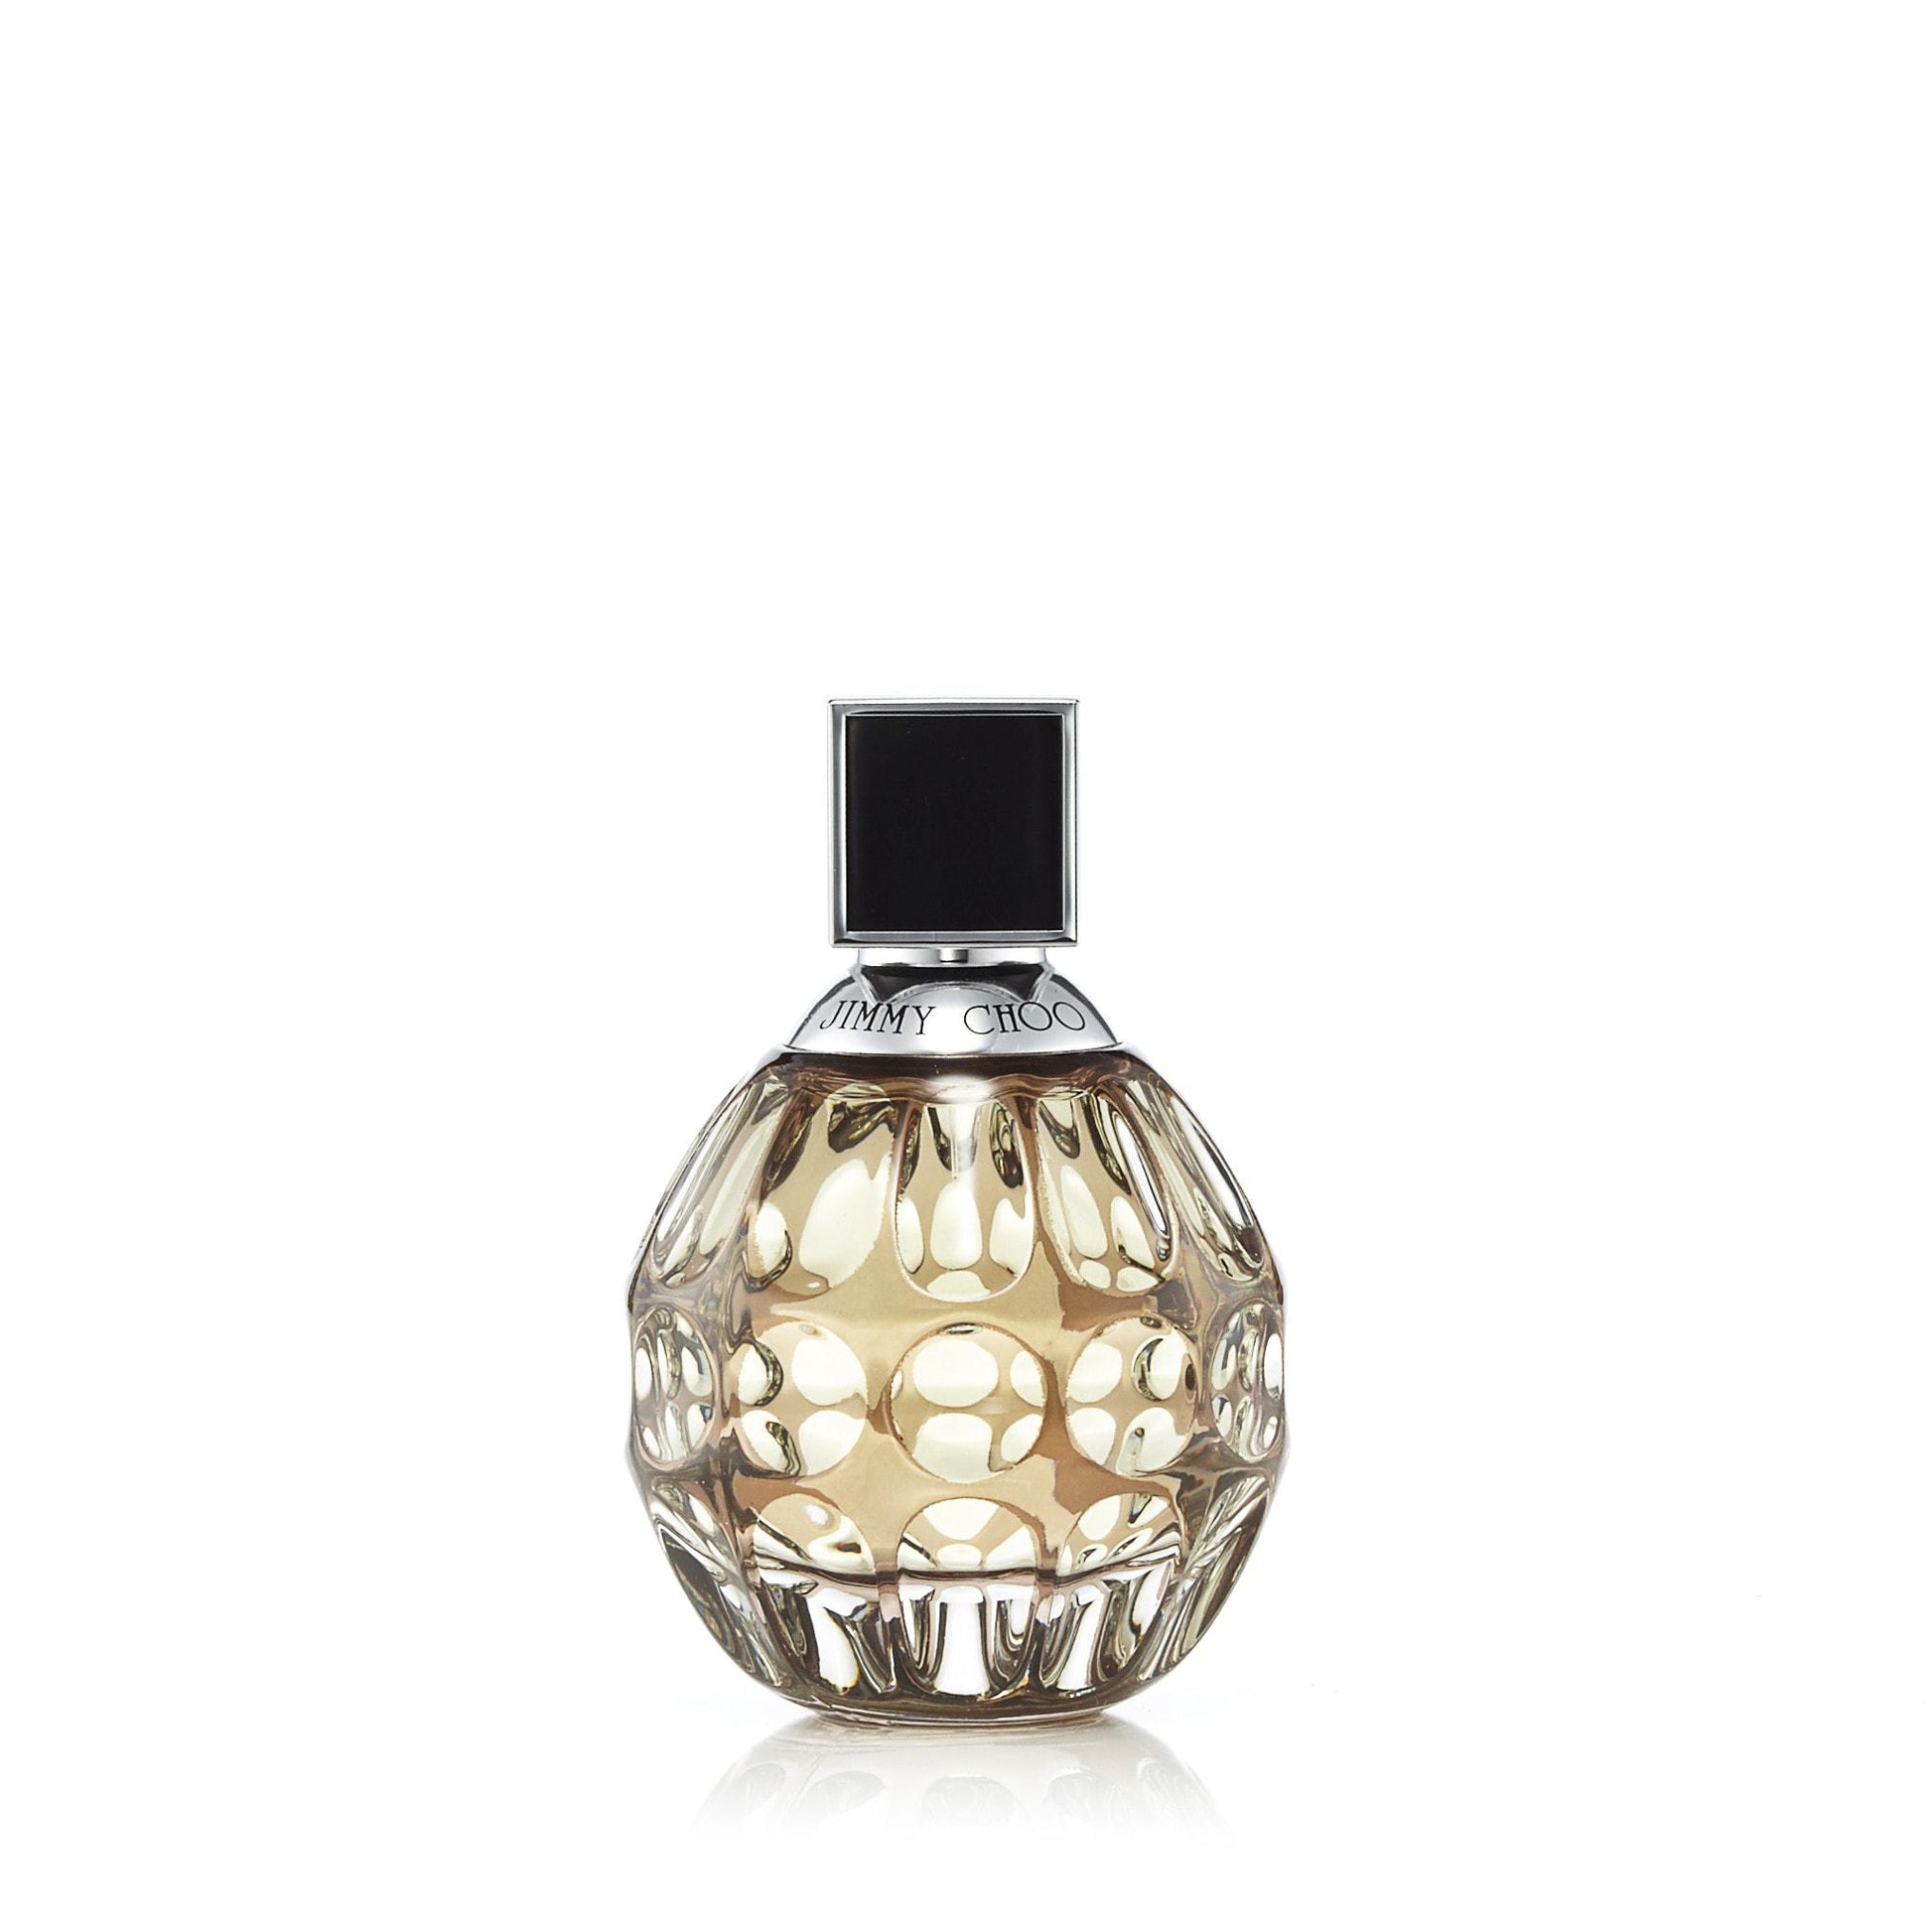 Jimmy Choo Eau de Parfum Spray for Women by Jimmy Choo, Product image 4